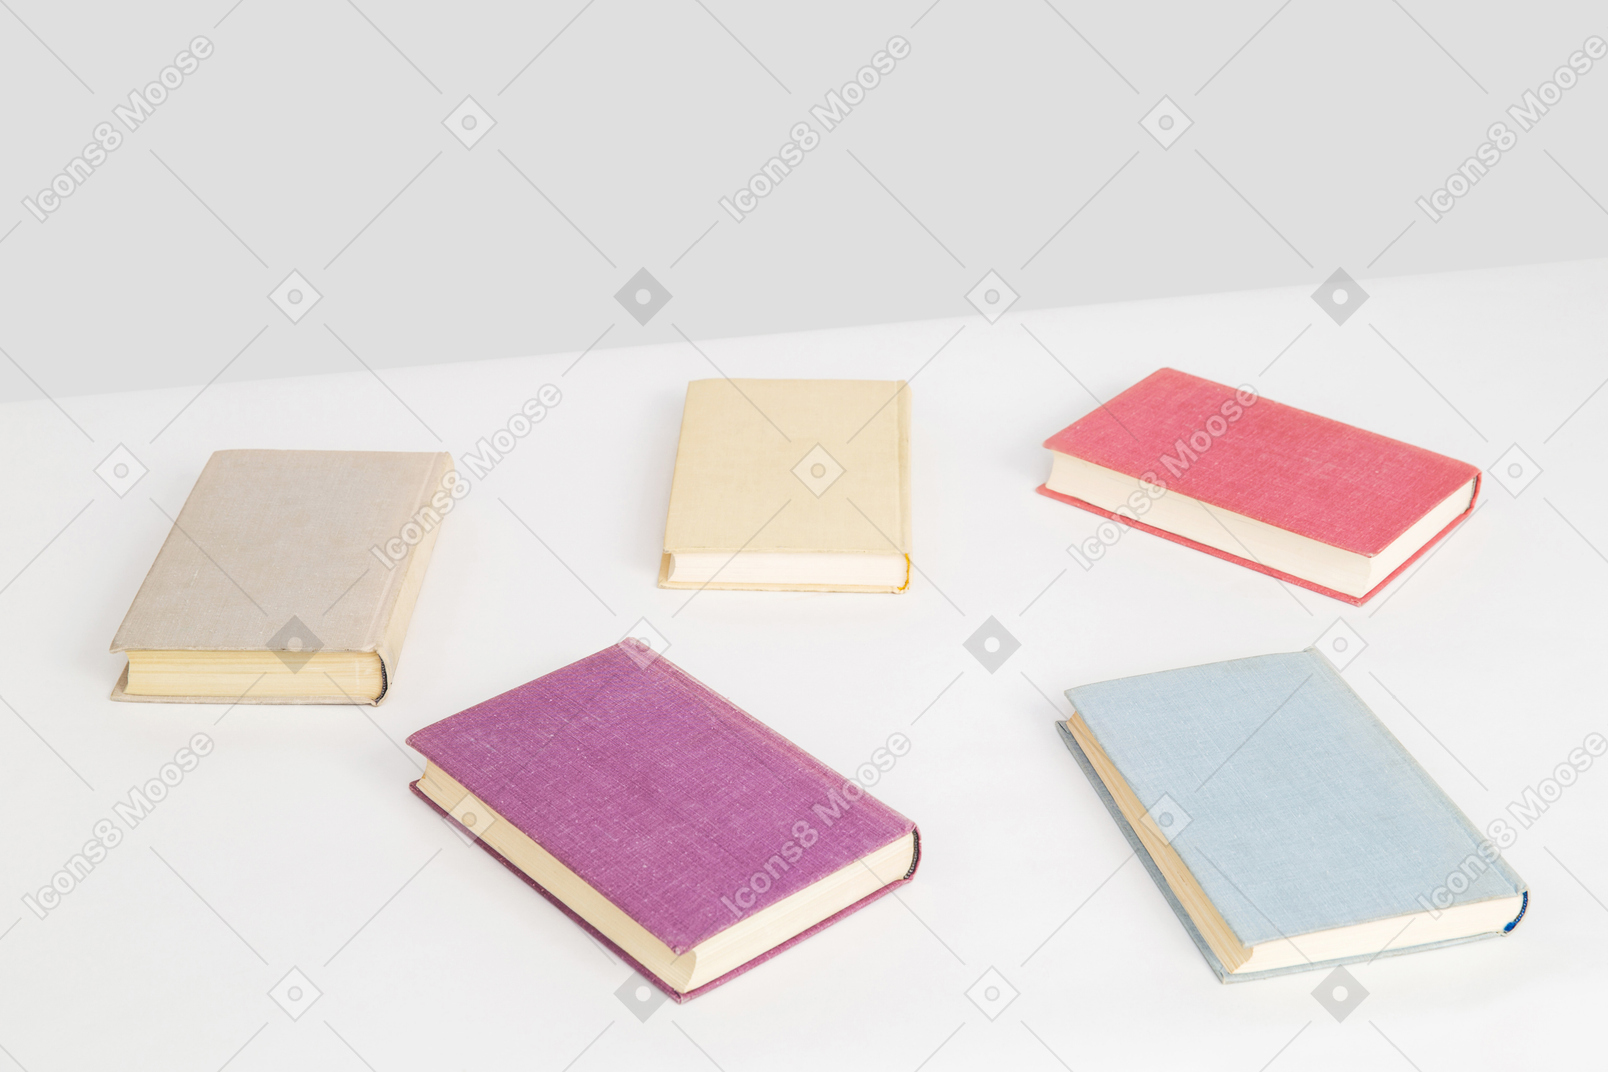 Cinque libri sul tavolo